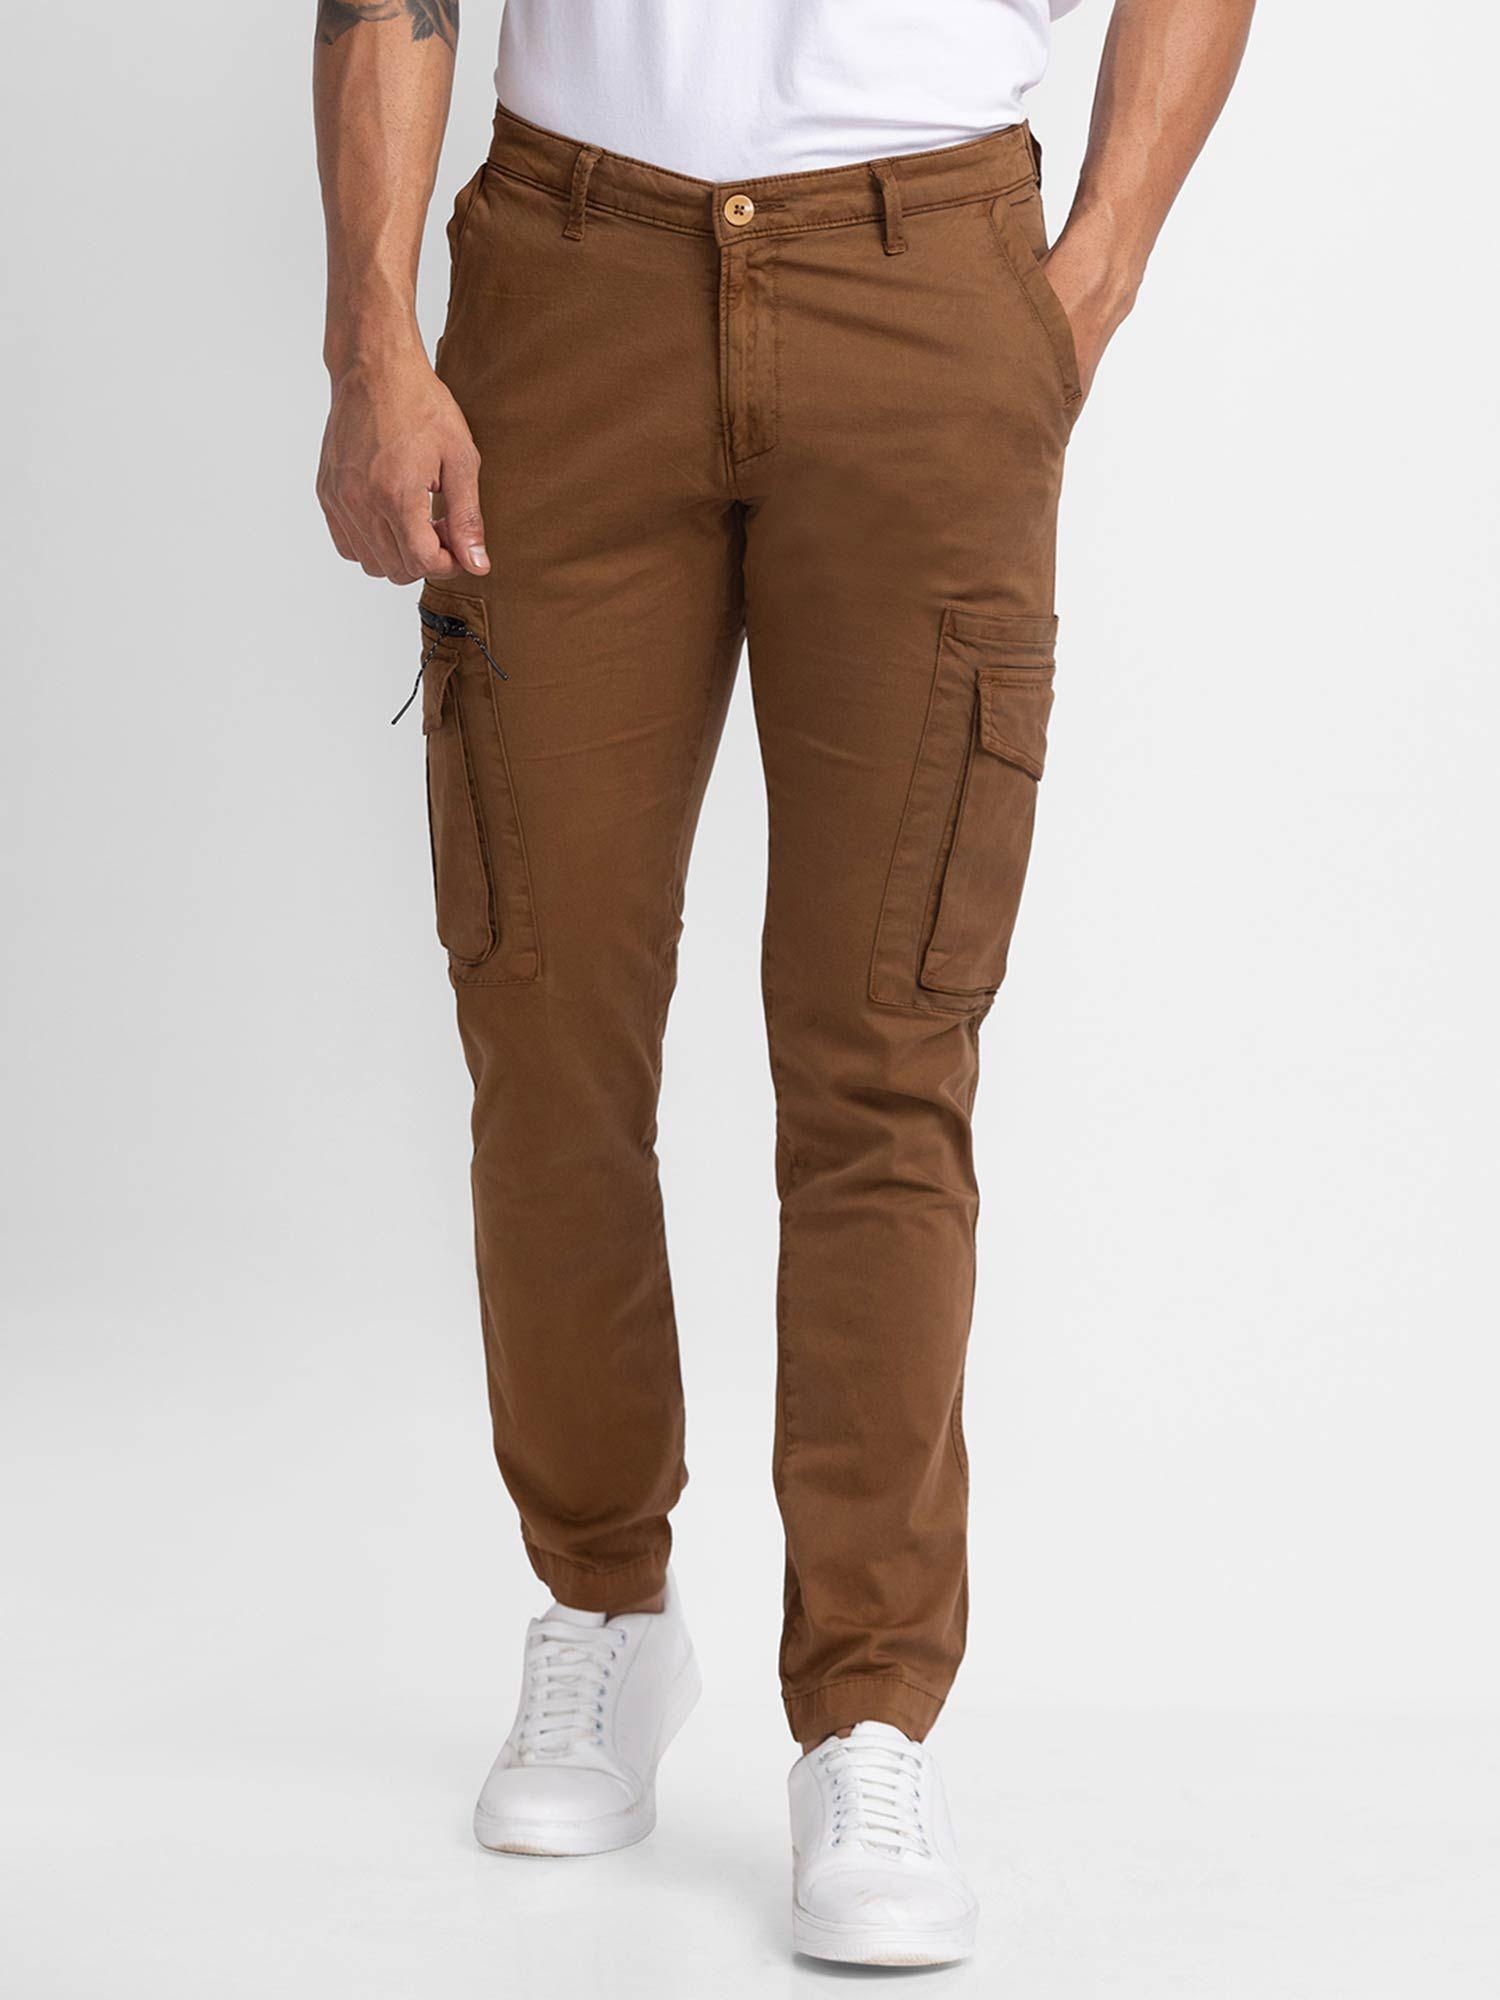 mud-brown-cotton-slim-fit-regular-length-trousers-for-men